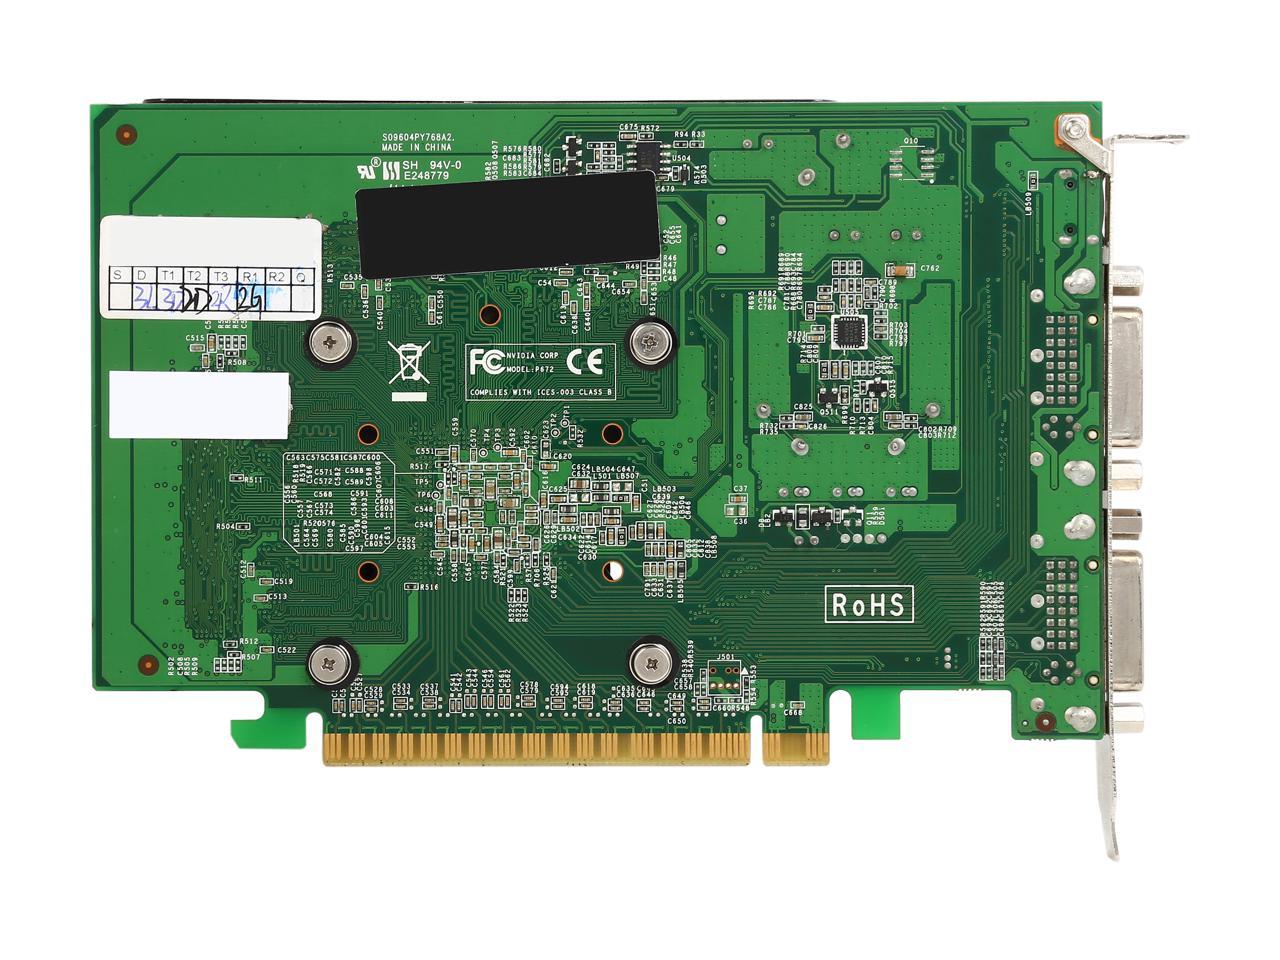 EVGA GeForce GT 730 DirectX 12 (feature level 11_0) 01G-P3-2731-RX 1GB 128-Bit DDR3 PCI Express 2.0 Video Card